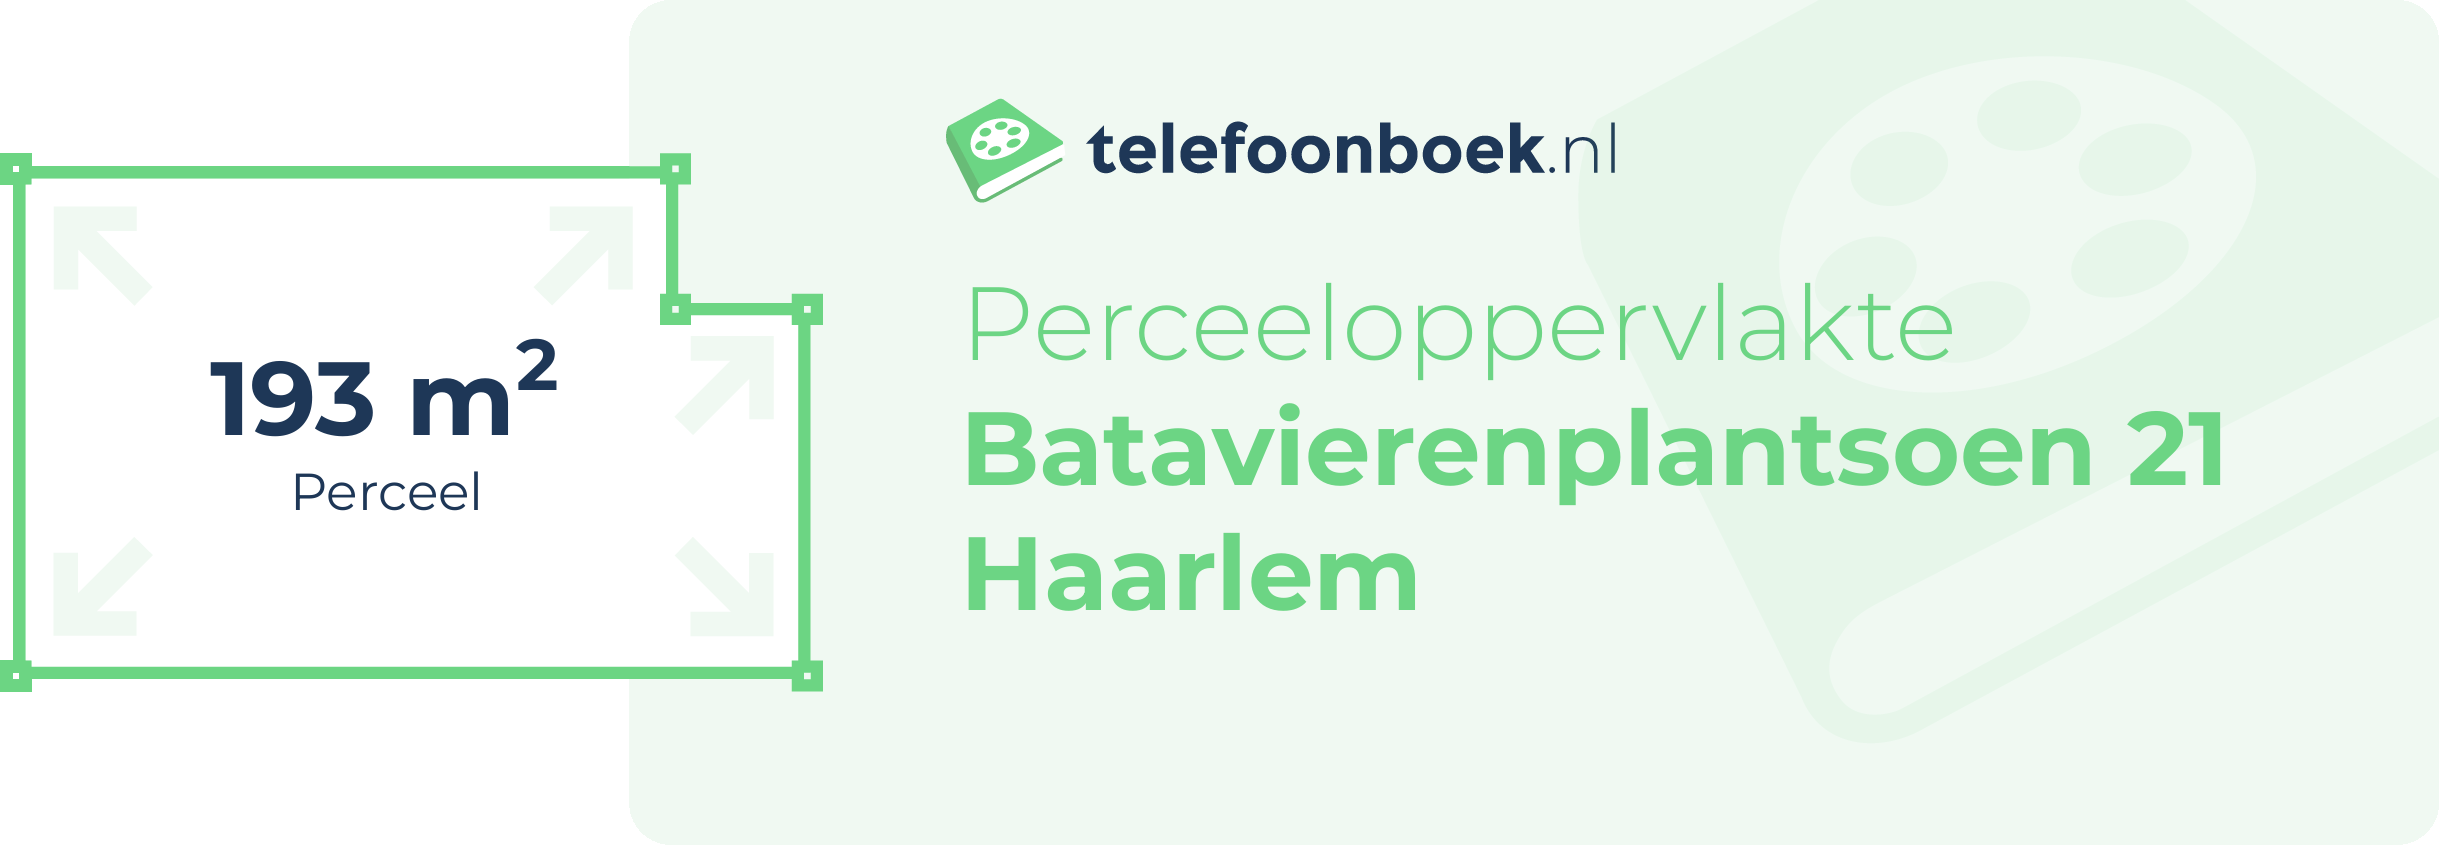 Perceeloppervlakte Batavierenplantsoen 21 Haarlem